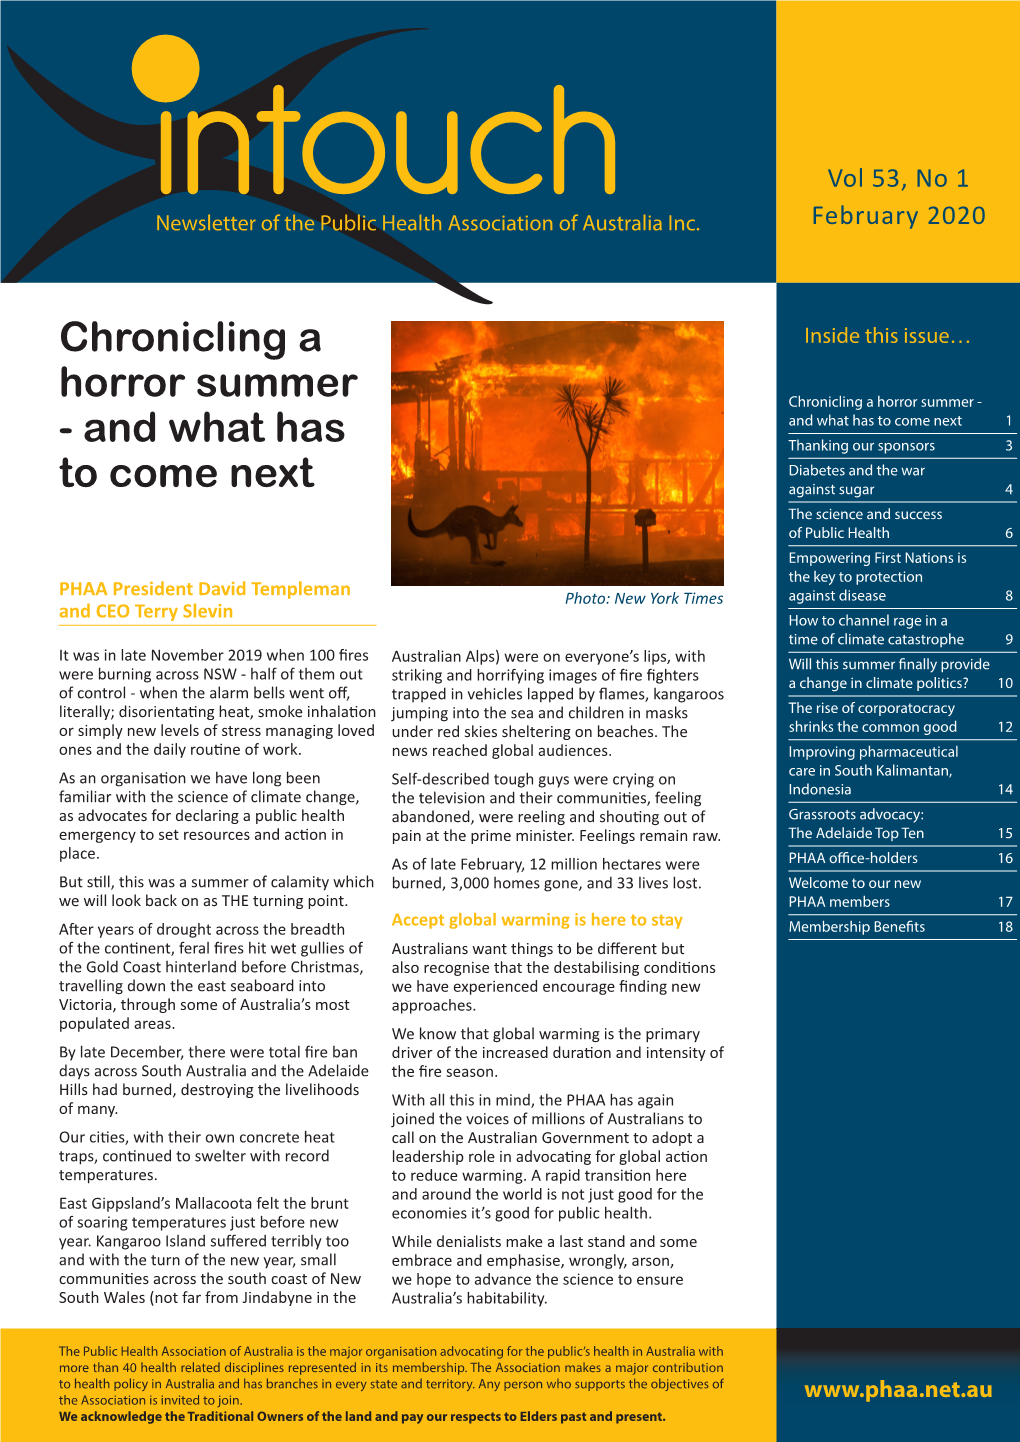 Chronicling a Horror Summer